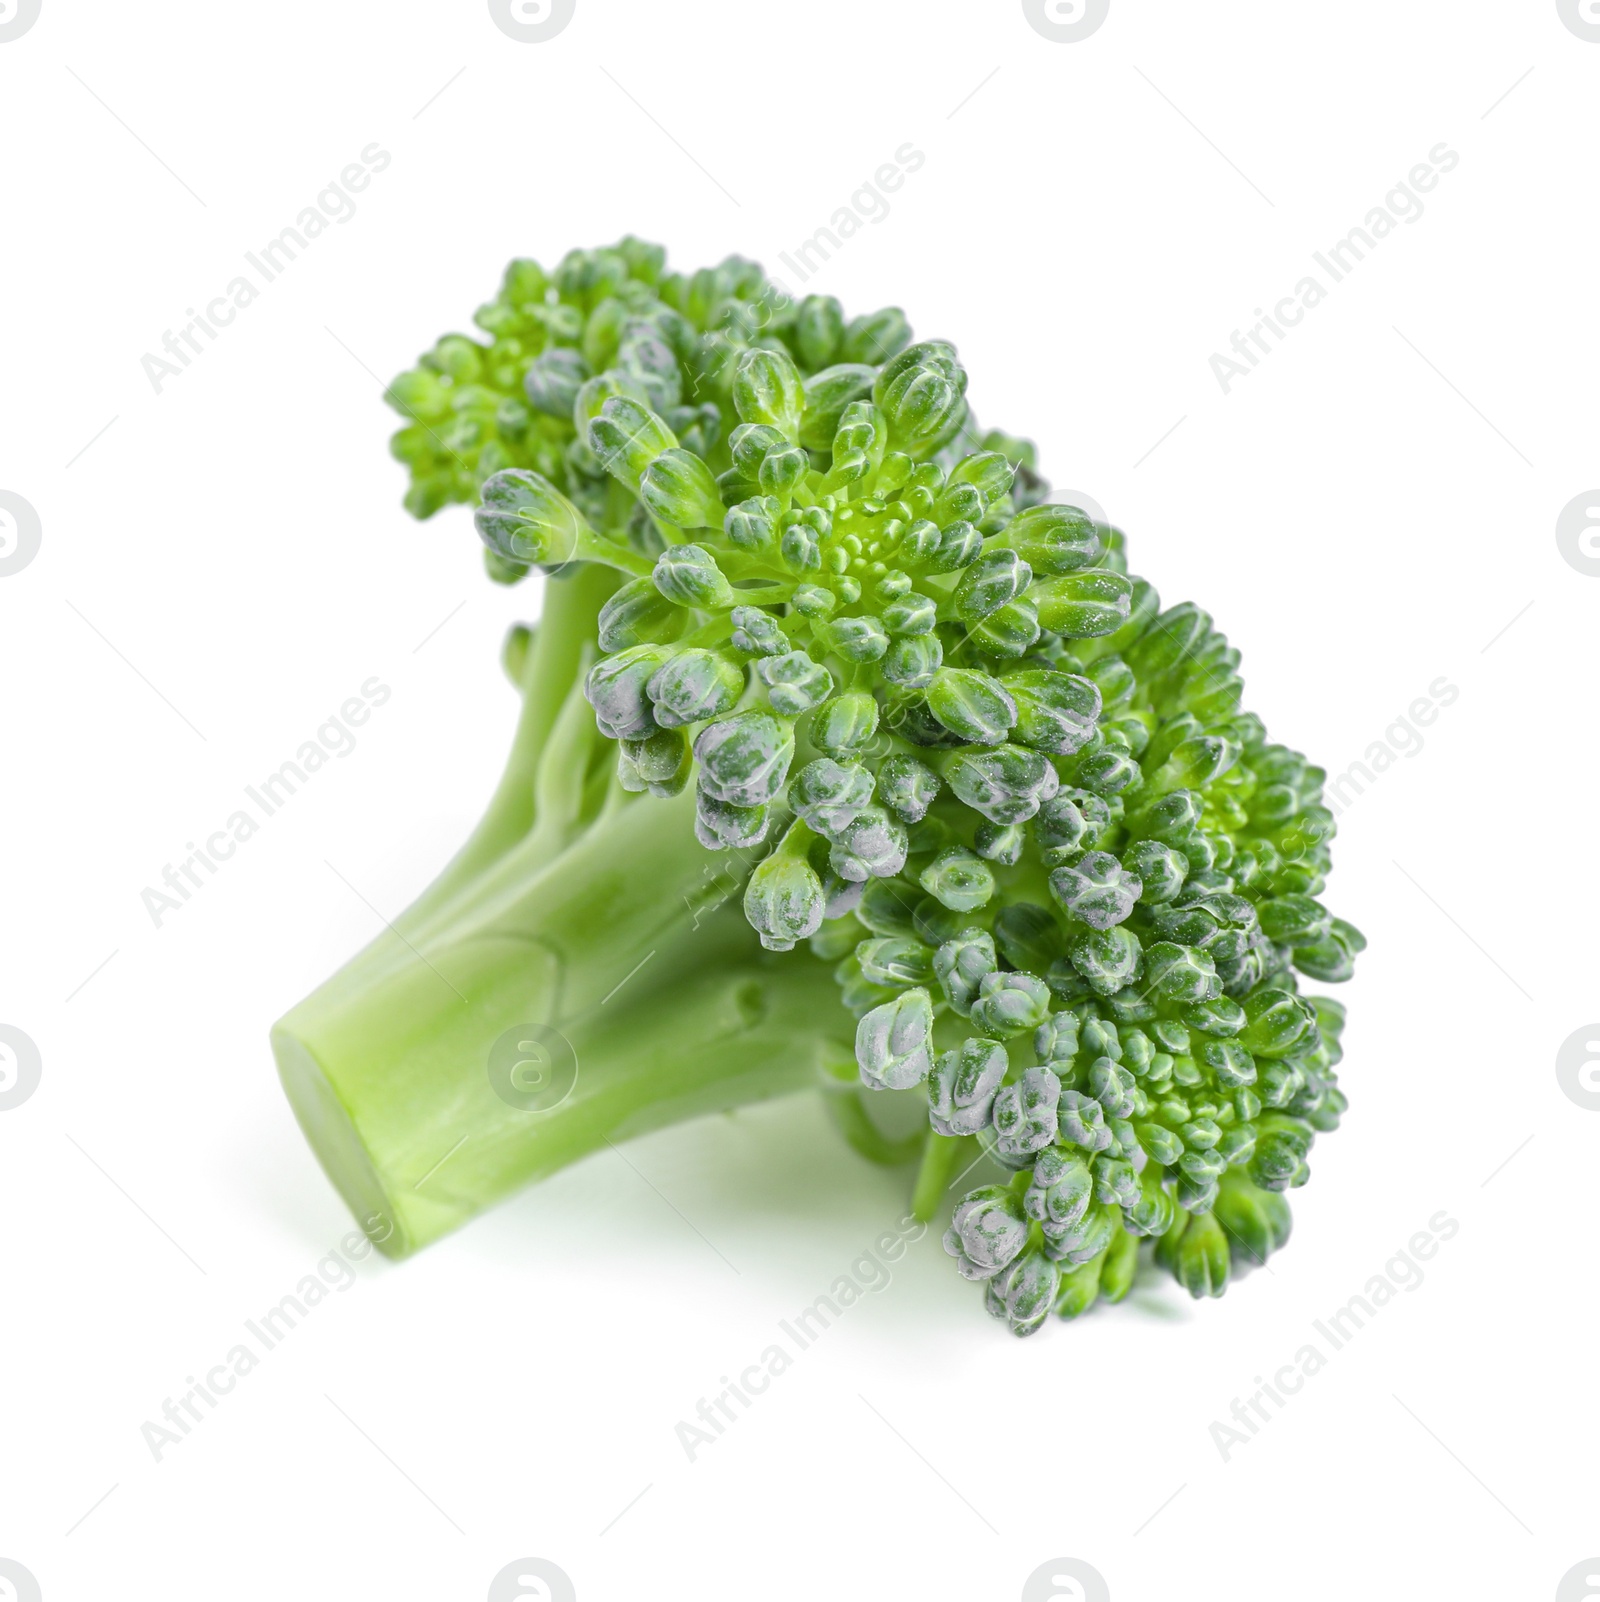 Photo of Fresh green raw broccoli on white background